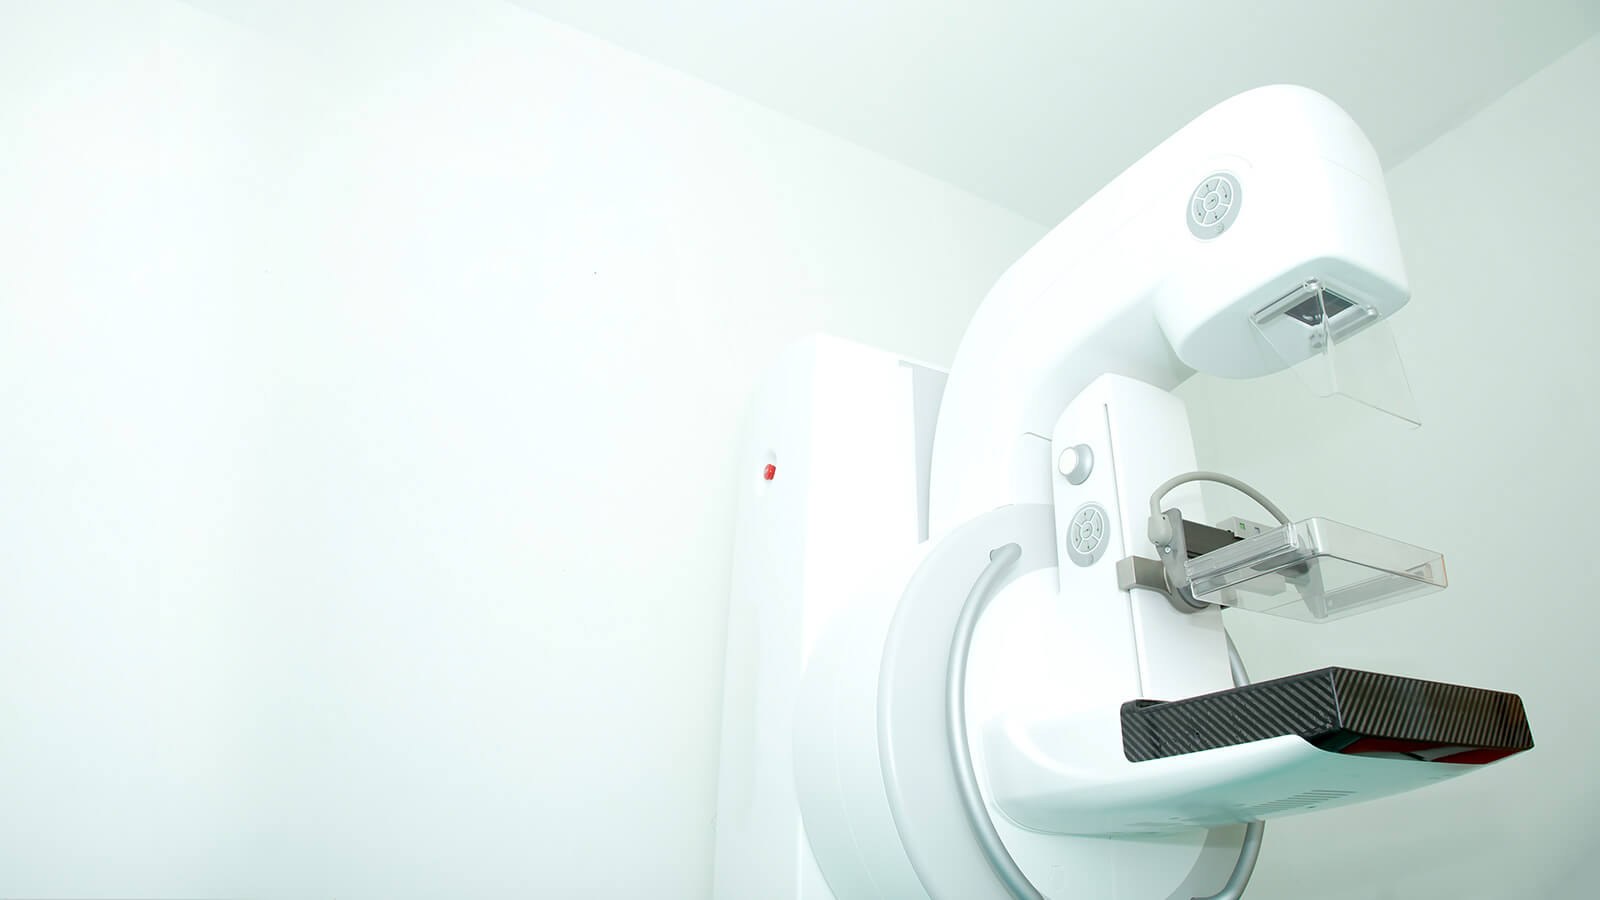 Background image of a radiology machine